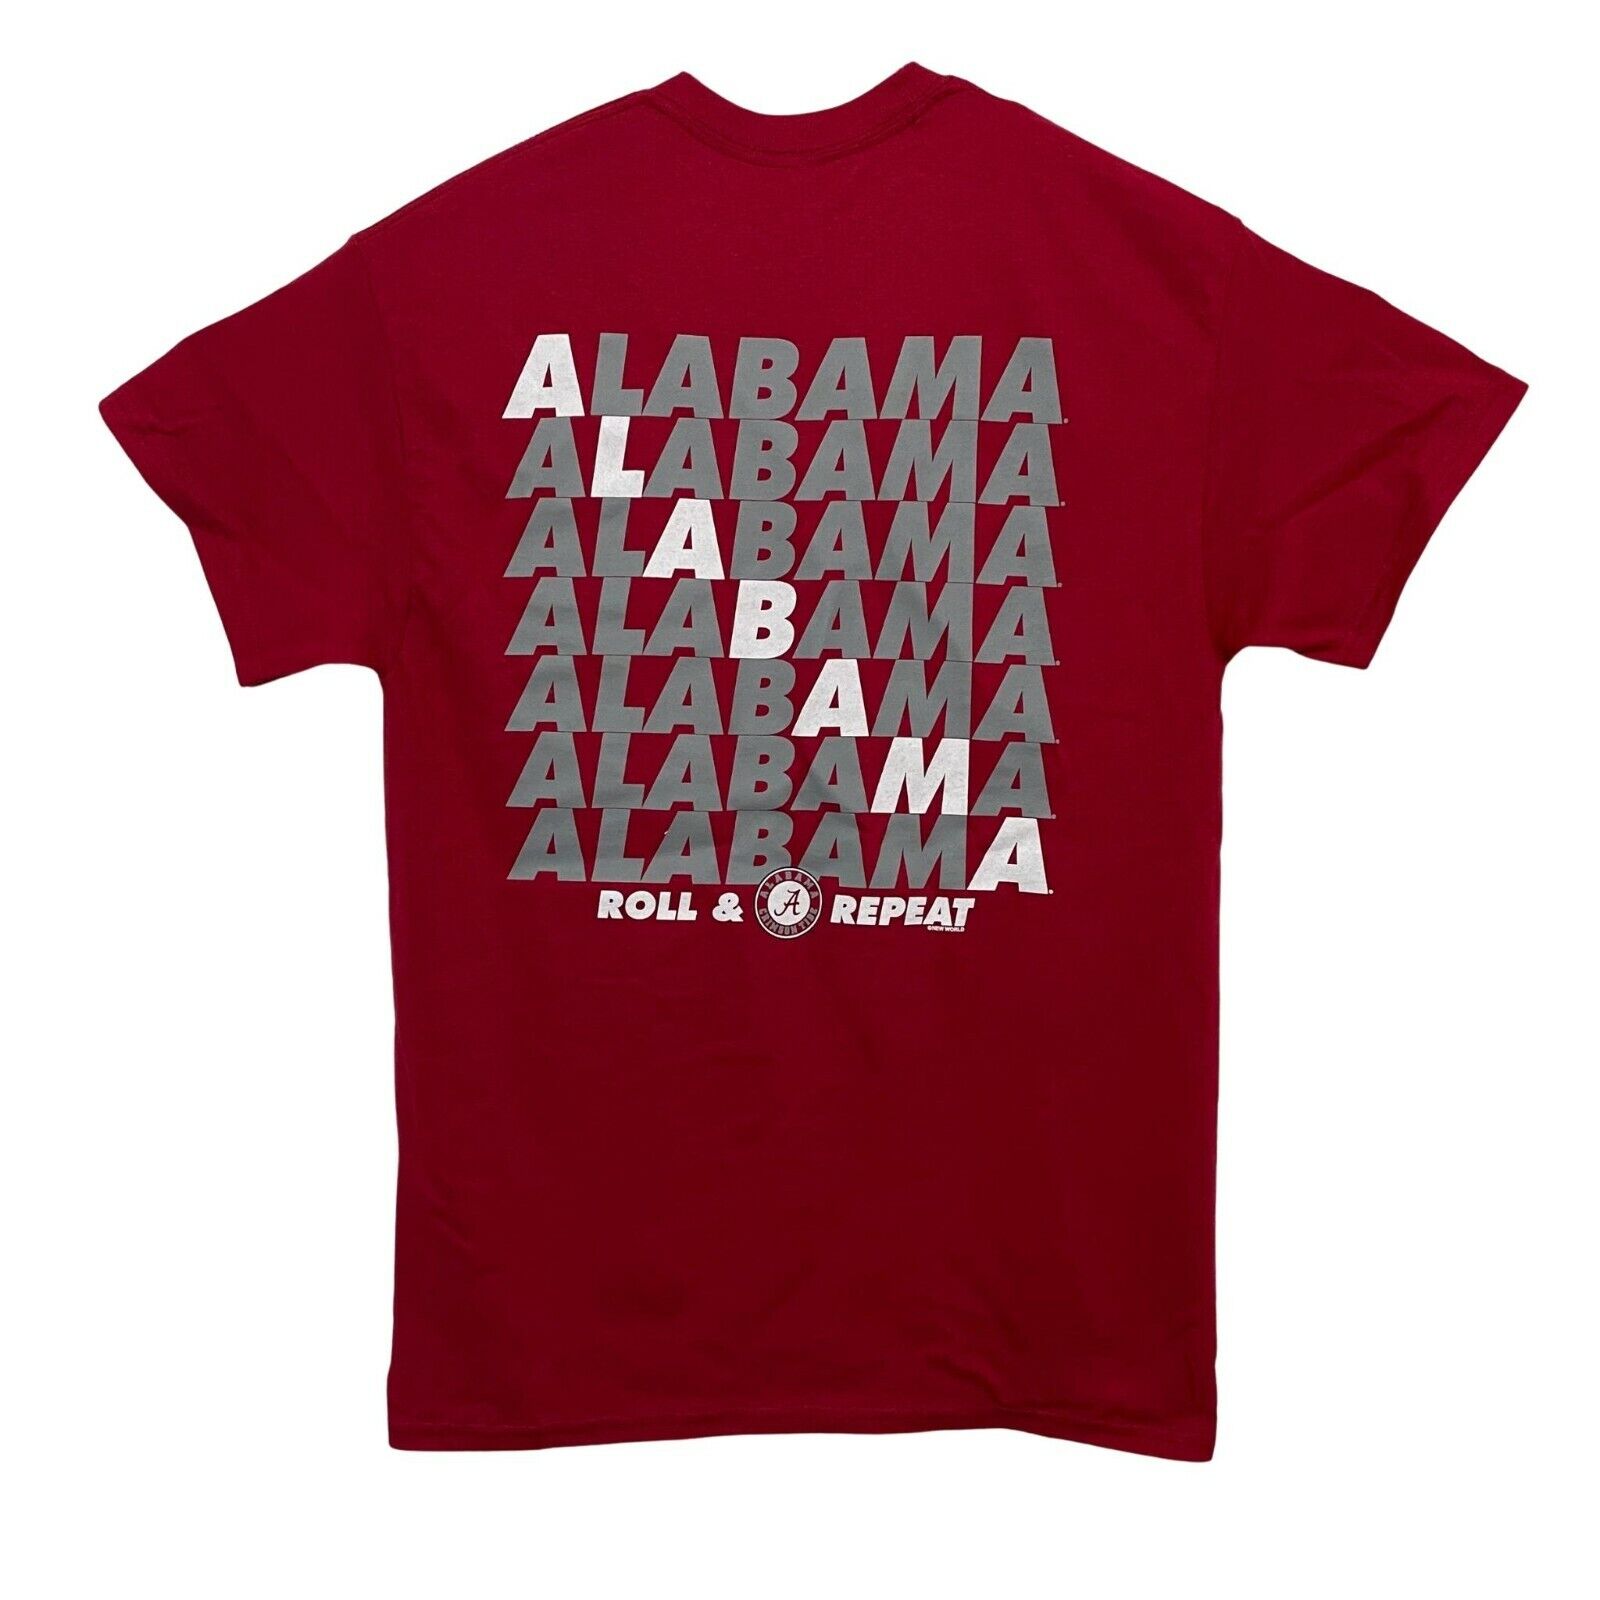 Alabama Crimson Tide T-Shirt - Roll & Repeat - Roll Tide Roll